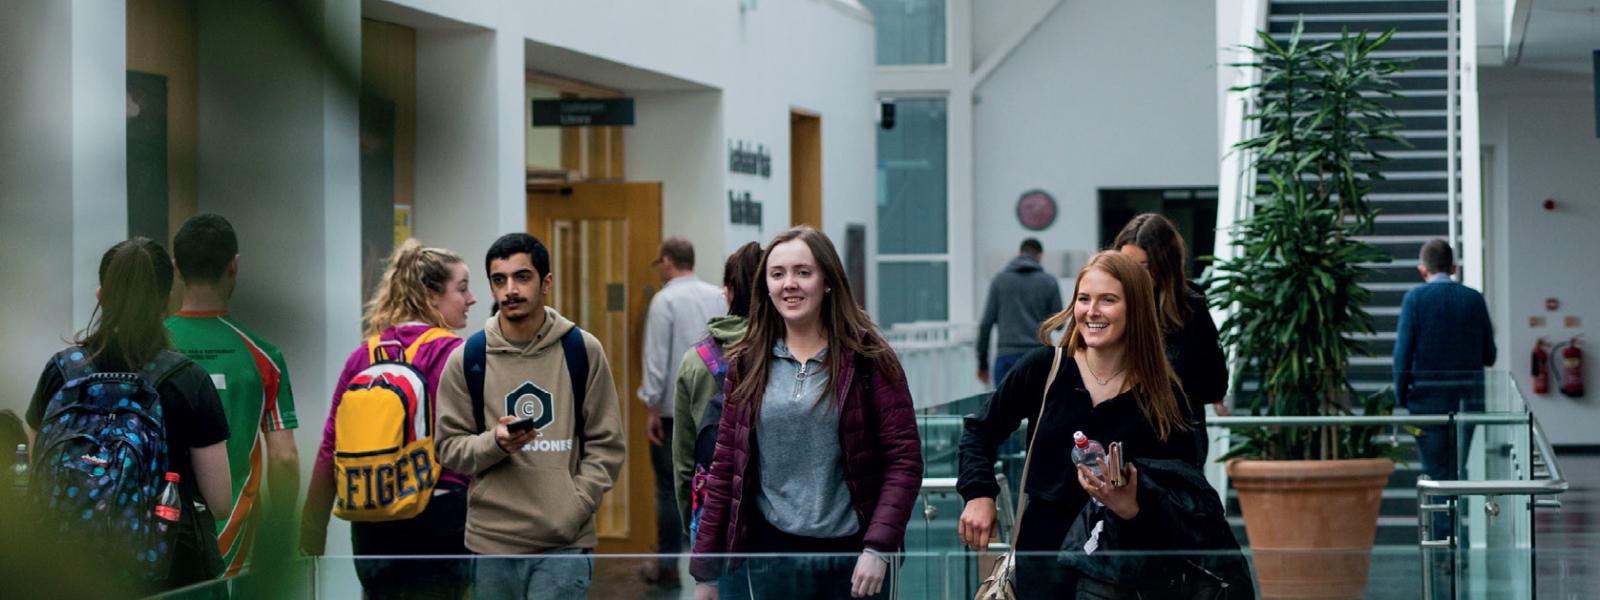 Students walking on concourse at ATU Sligo